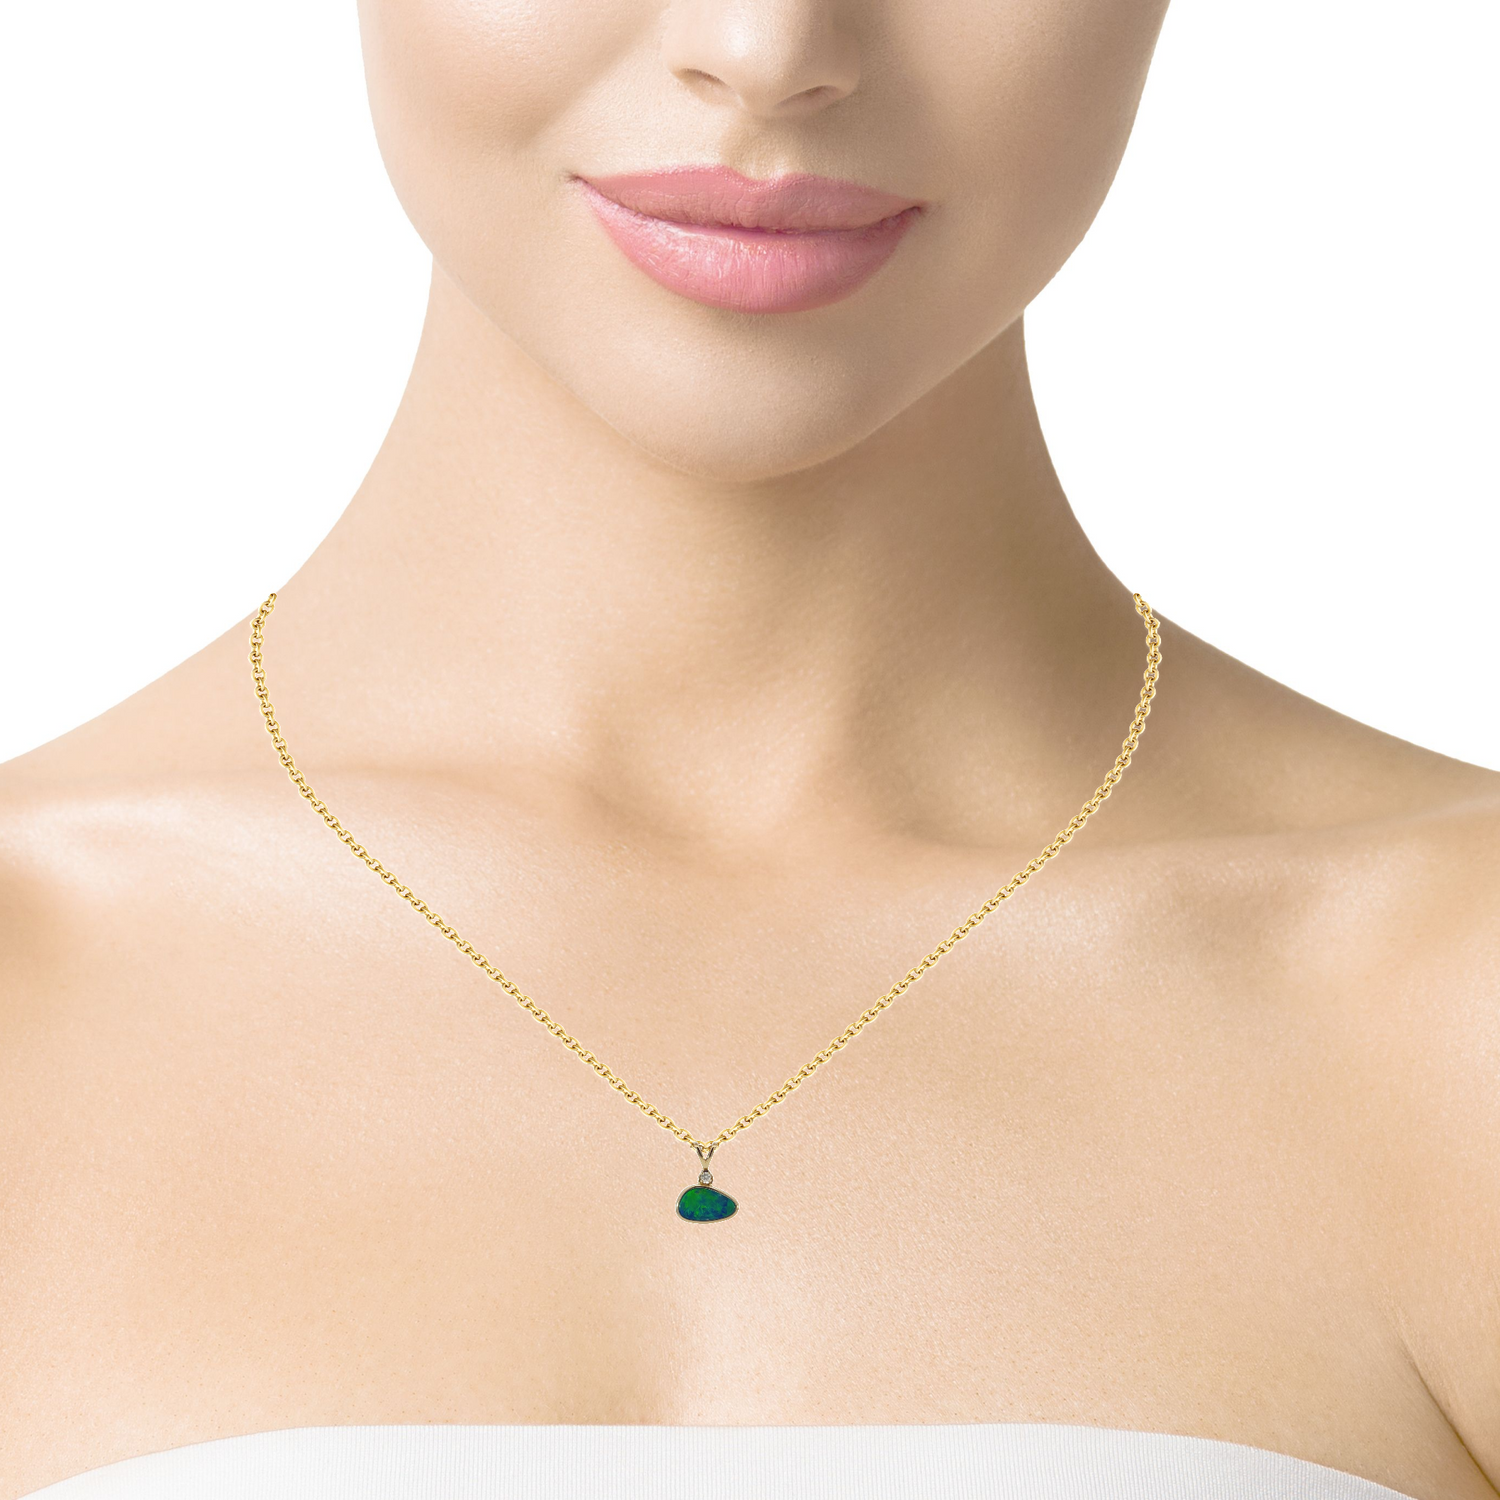 9kt Yellow Gold Opal doublet and diamond pendant - Masterpiece Jewellery Opal & Gems Sydney Australia | Online Shop